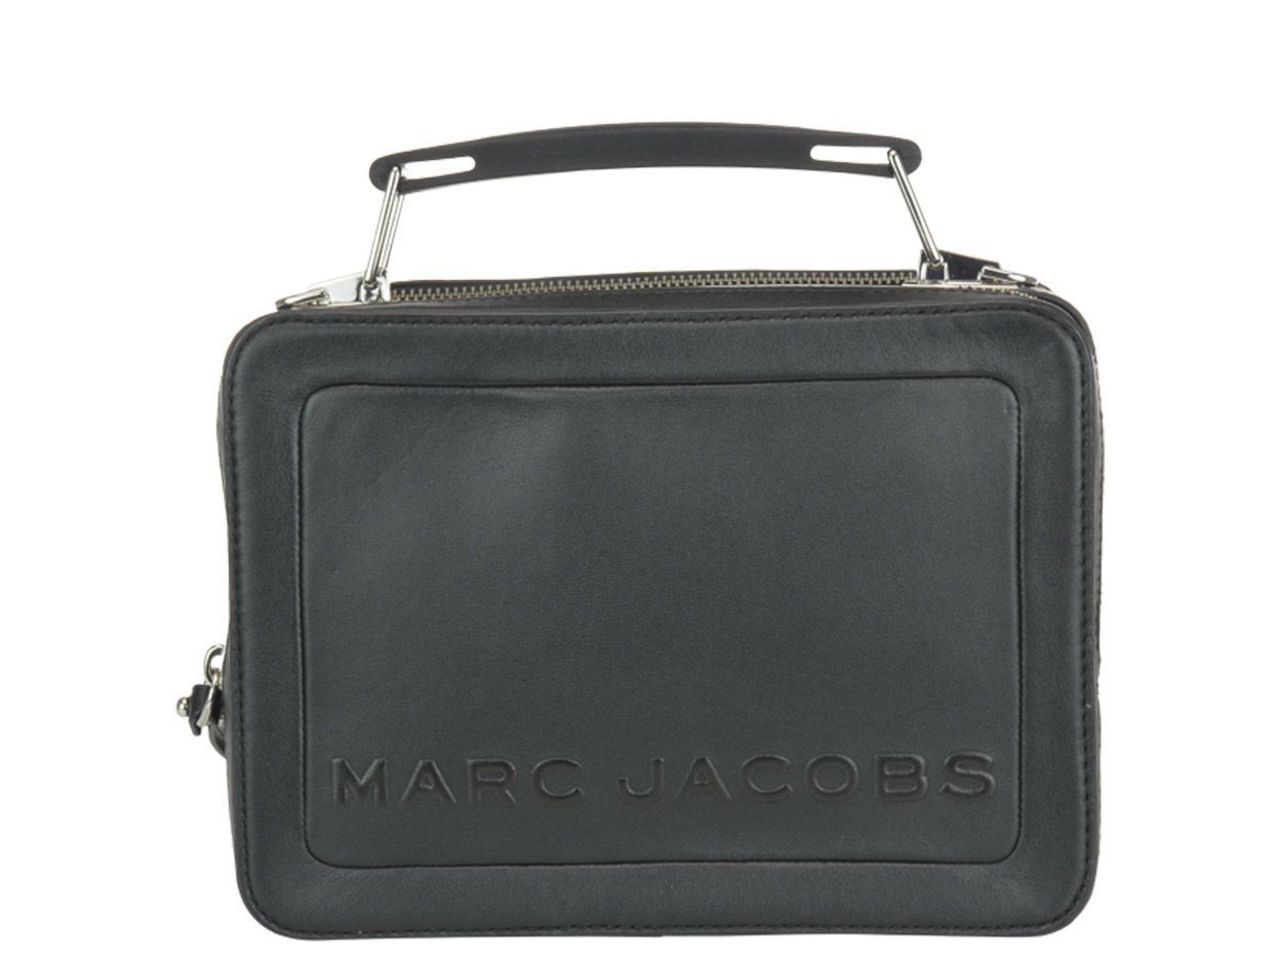 Marc Jacobs The Box 23 Bag